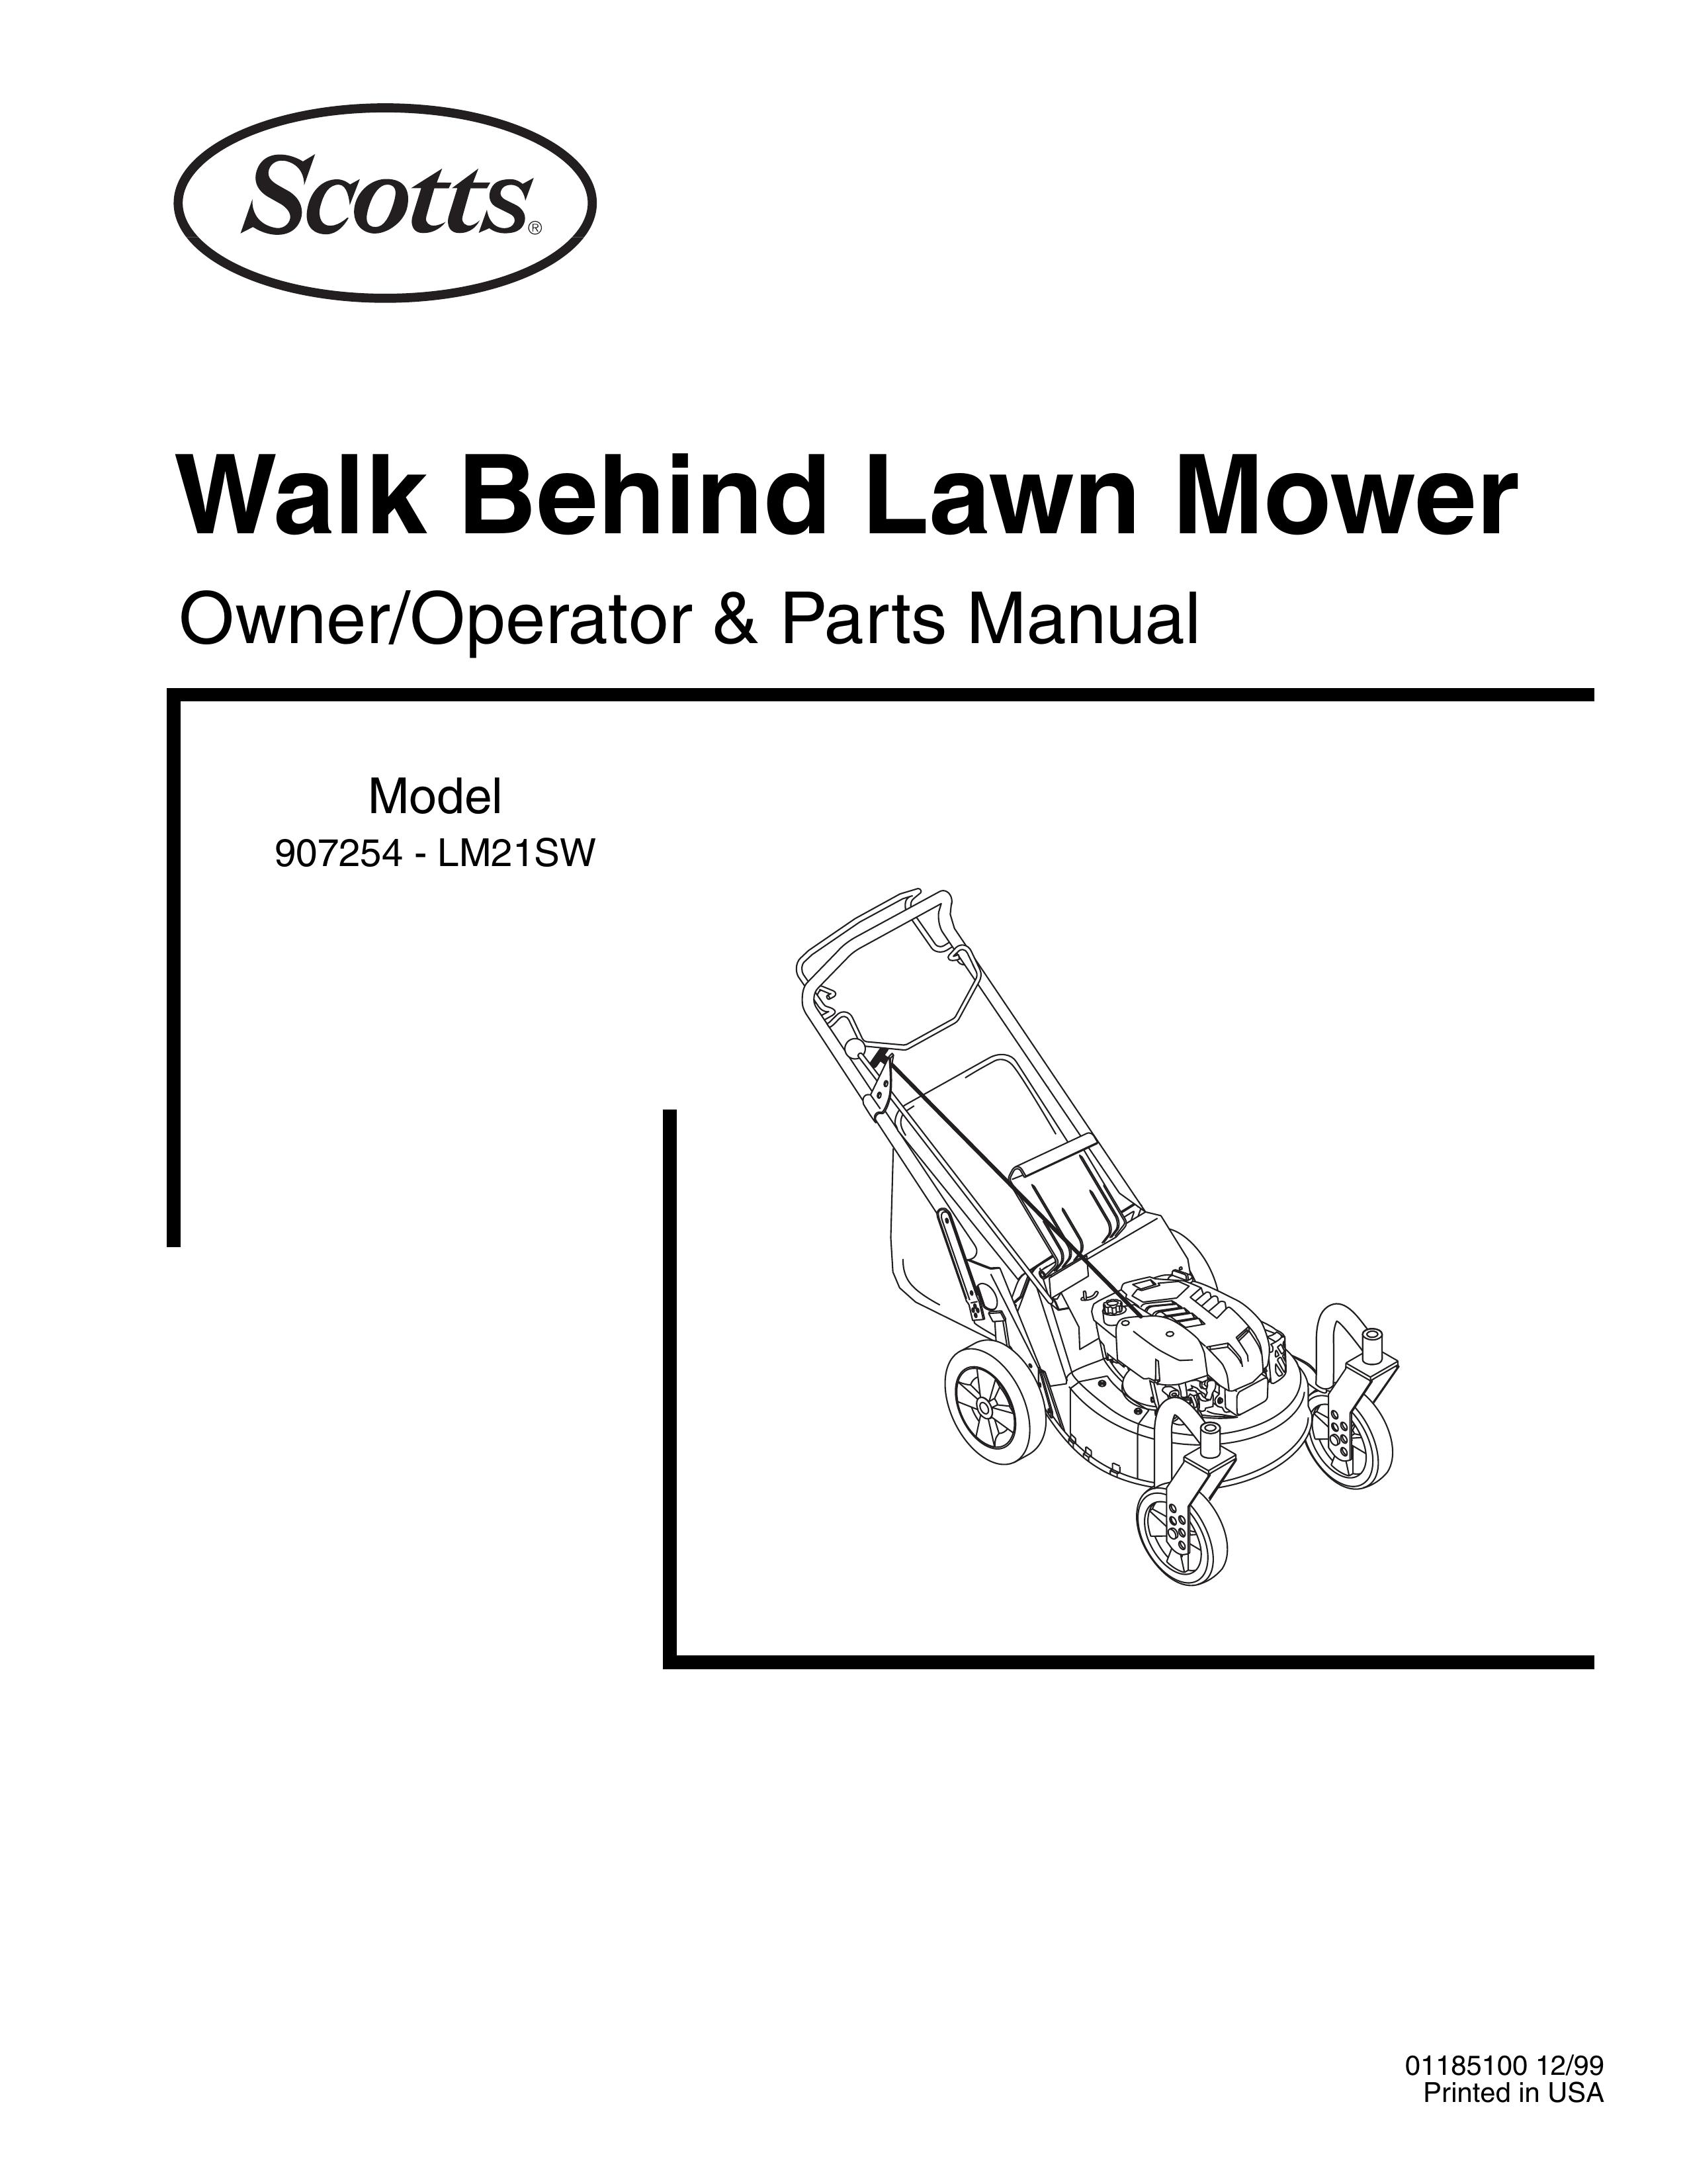 Scotts 907254 - LM21SW Lawn Mower User Manual